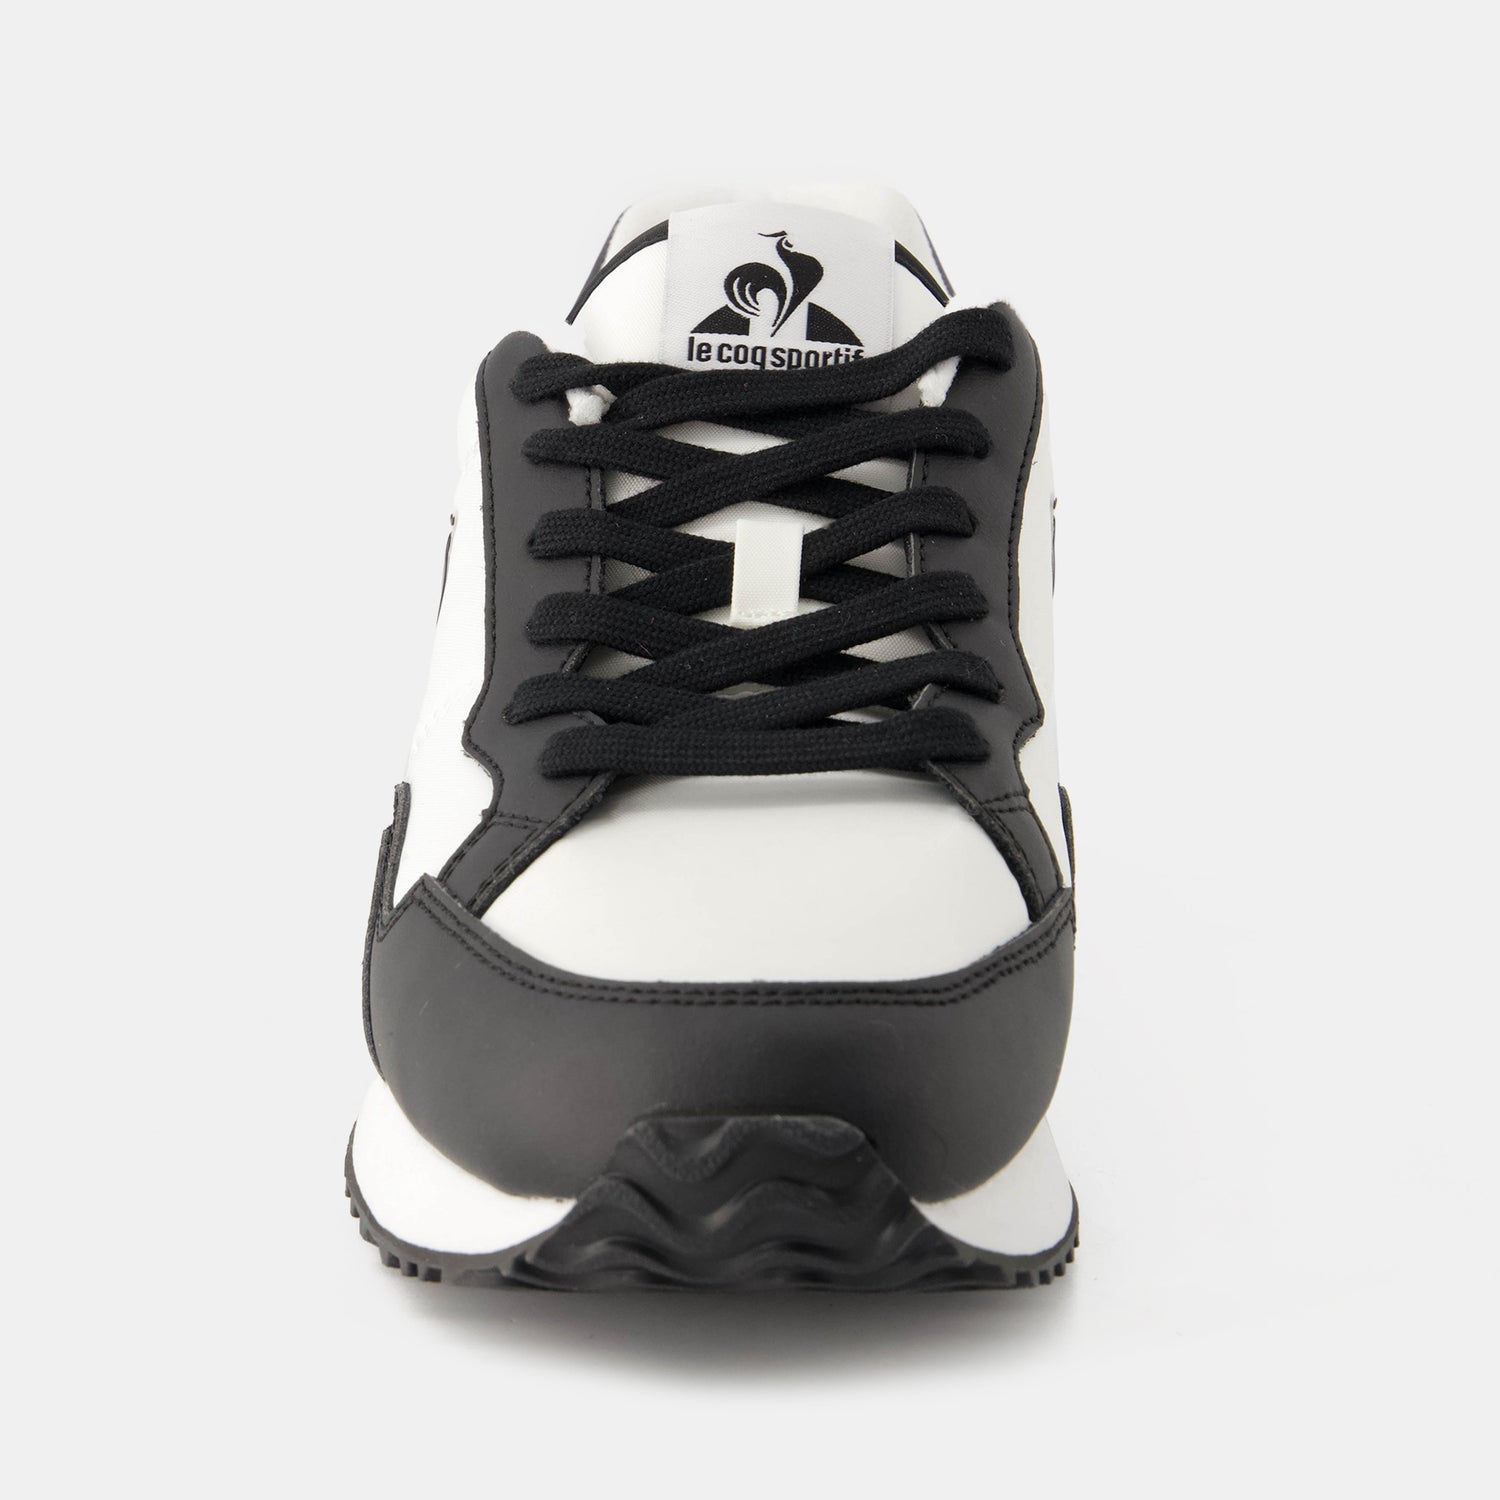 2410703-JET STAR_2 optical white/black | Chaussures JET STAR_2 Homme